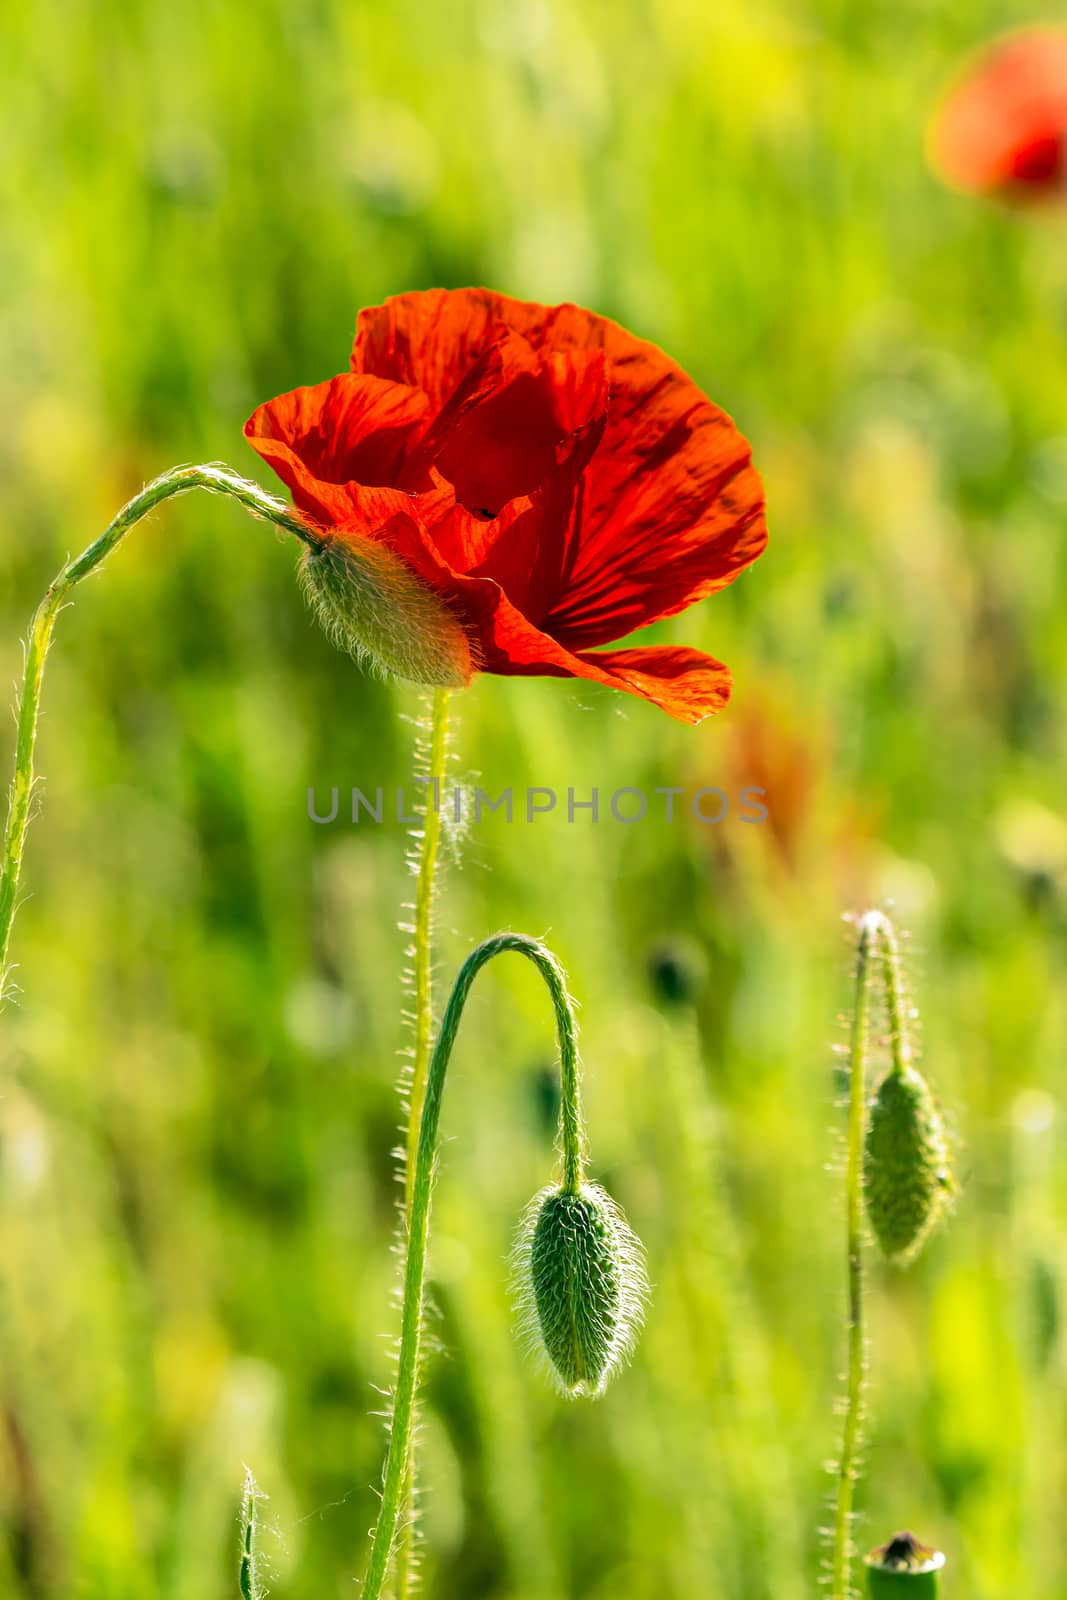 one big red poppy flower in the green wheat field in summer